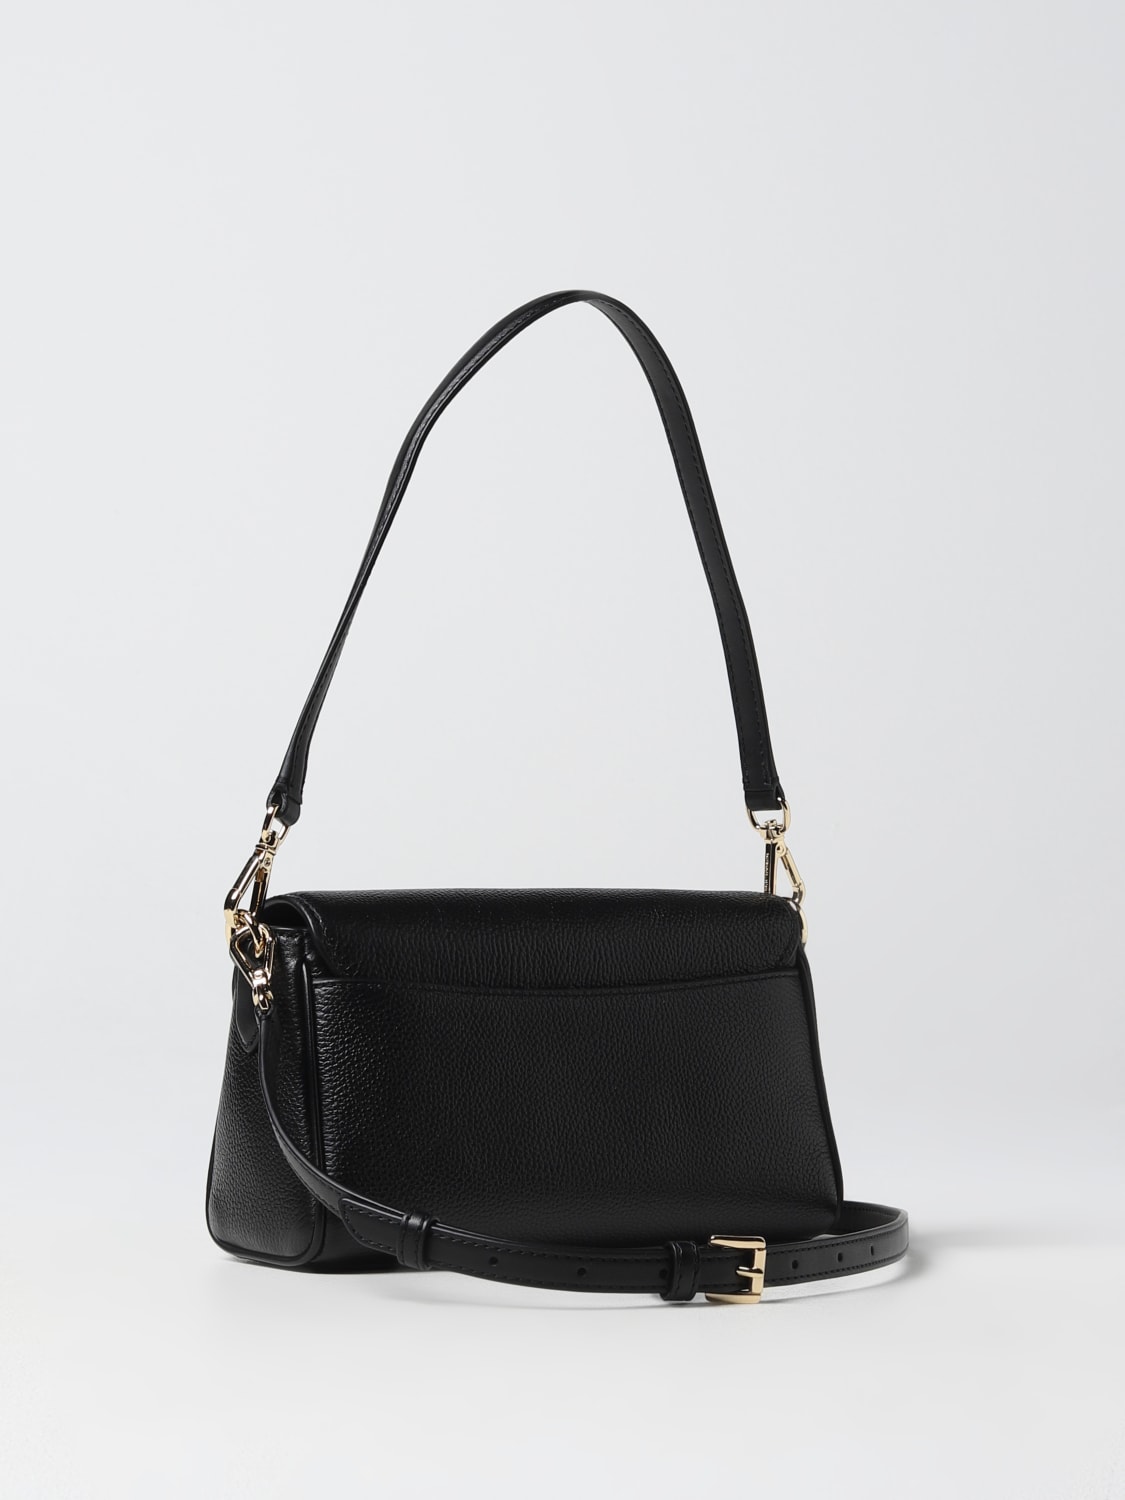 Michael Kors Women's Medium Convertible Shoulder Bag - Black 